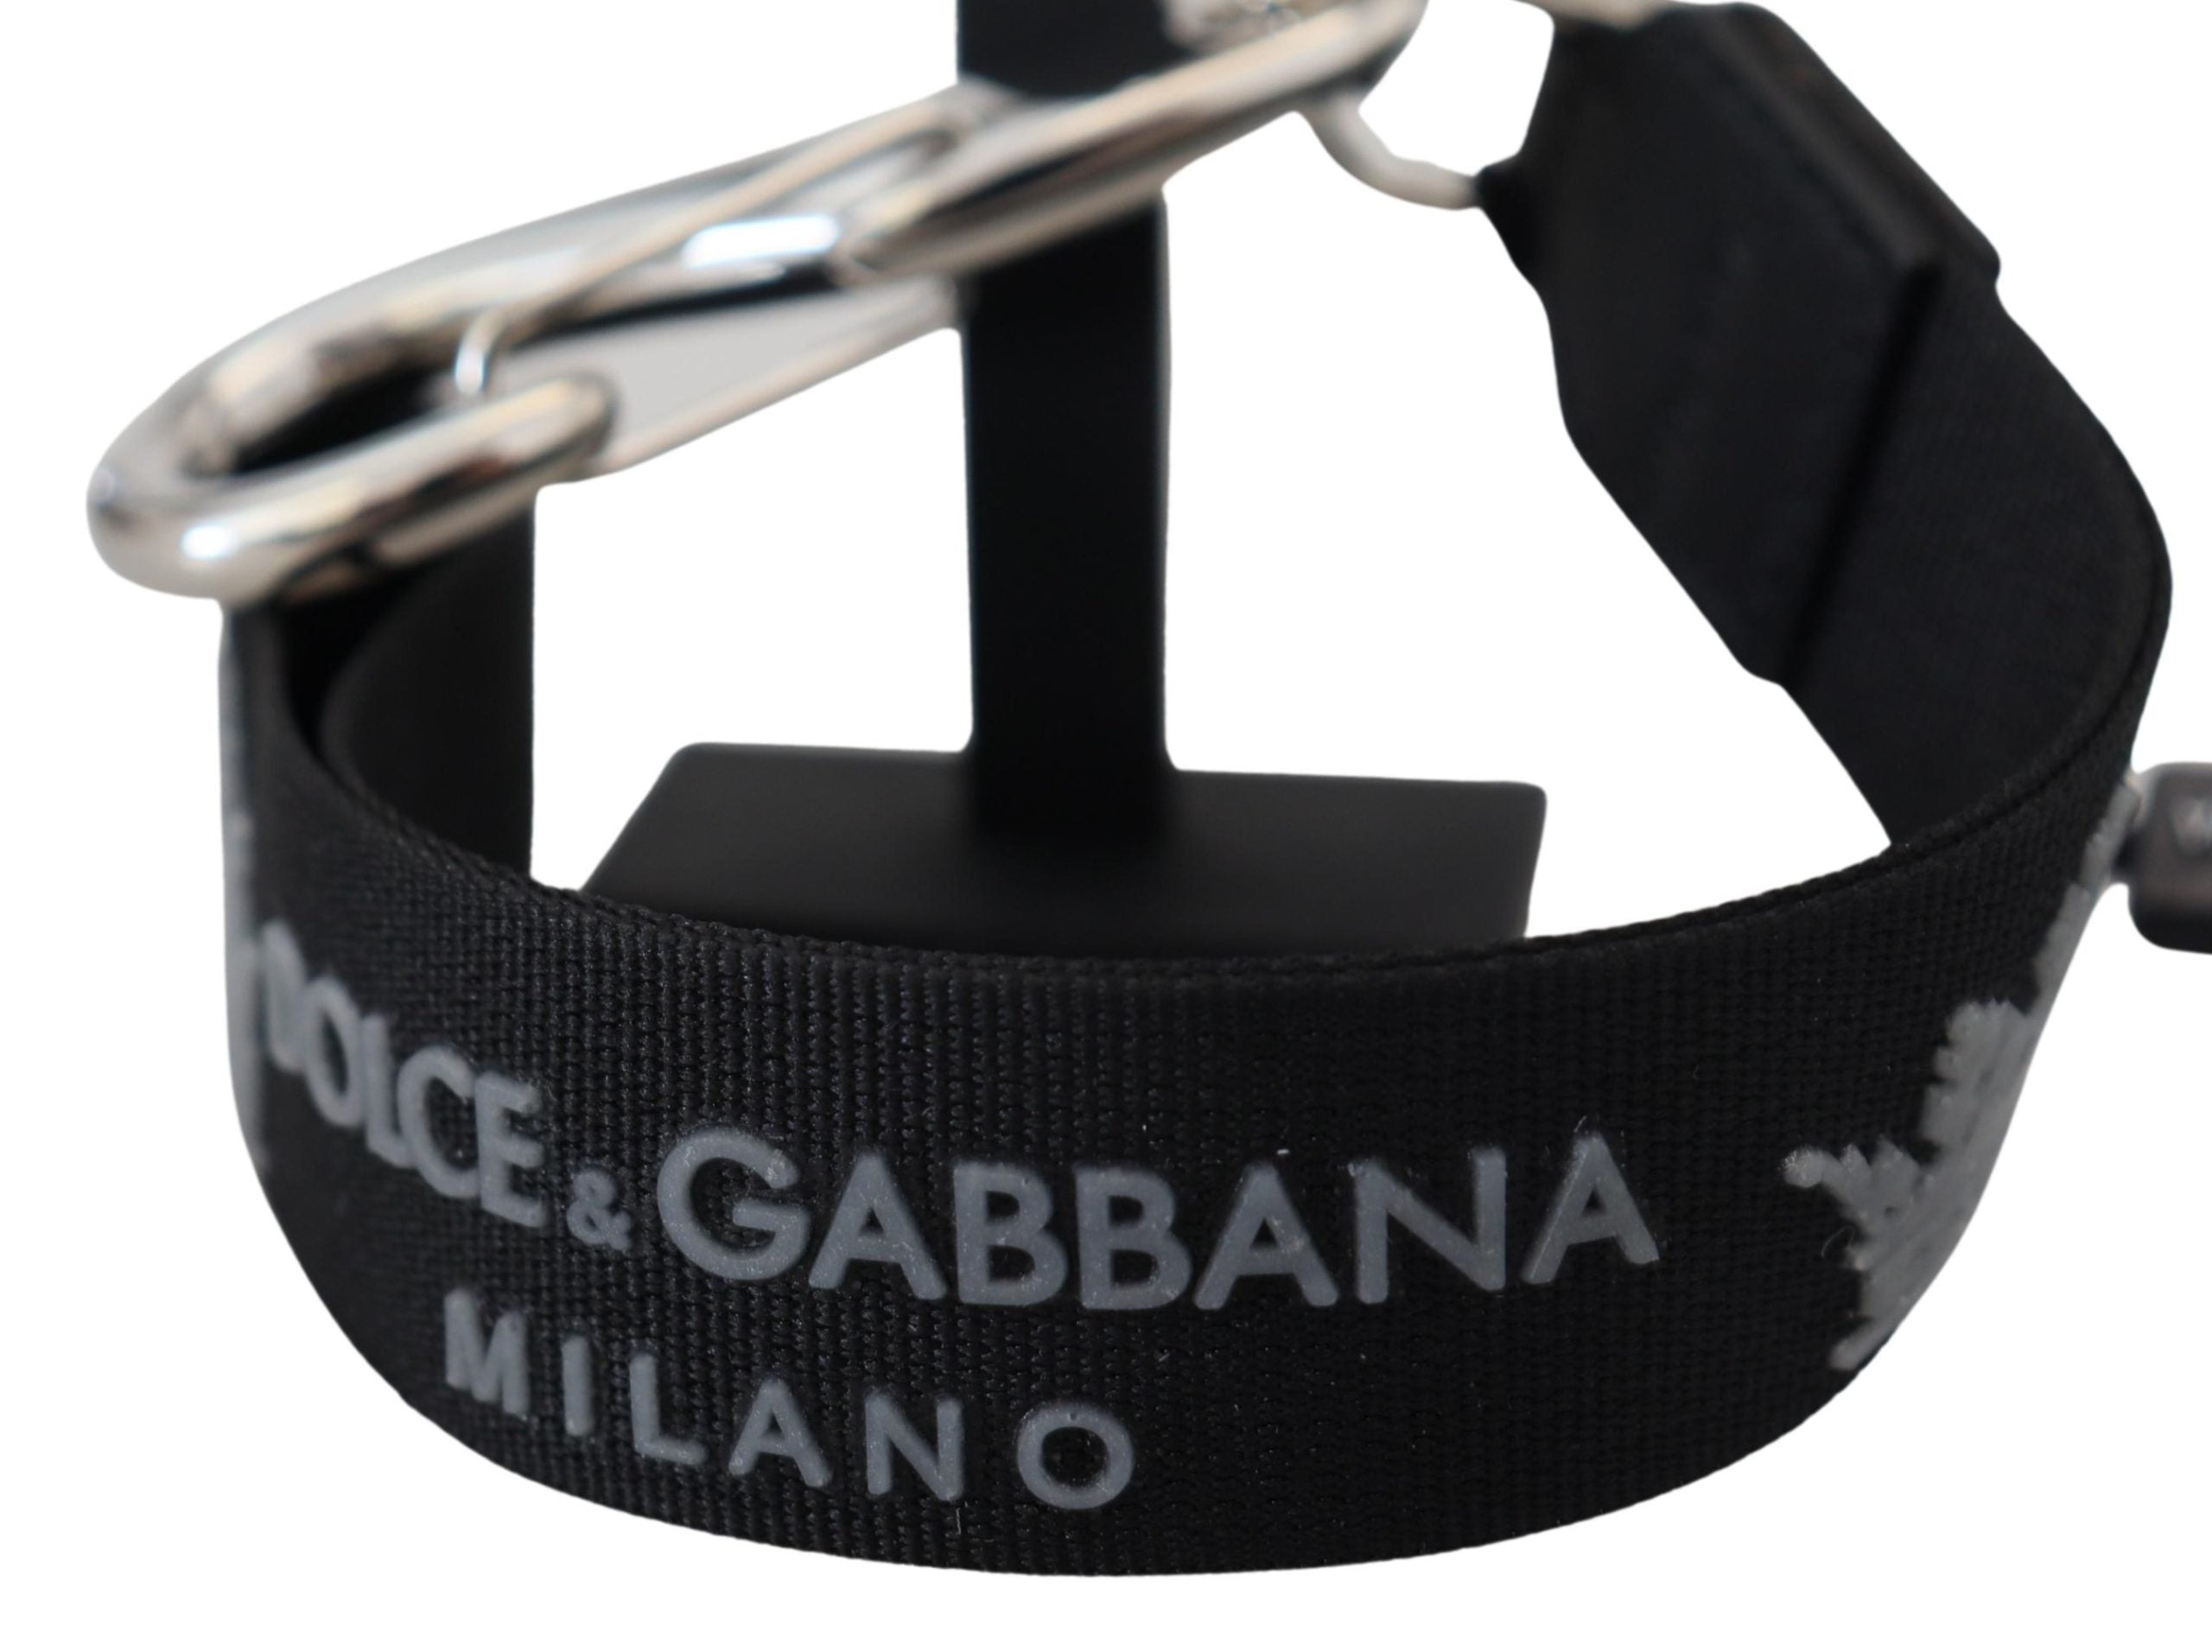 Dolce & Gabbana Elegant Black Charm Keychain with Brass Accents